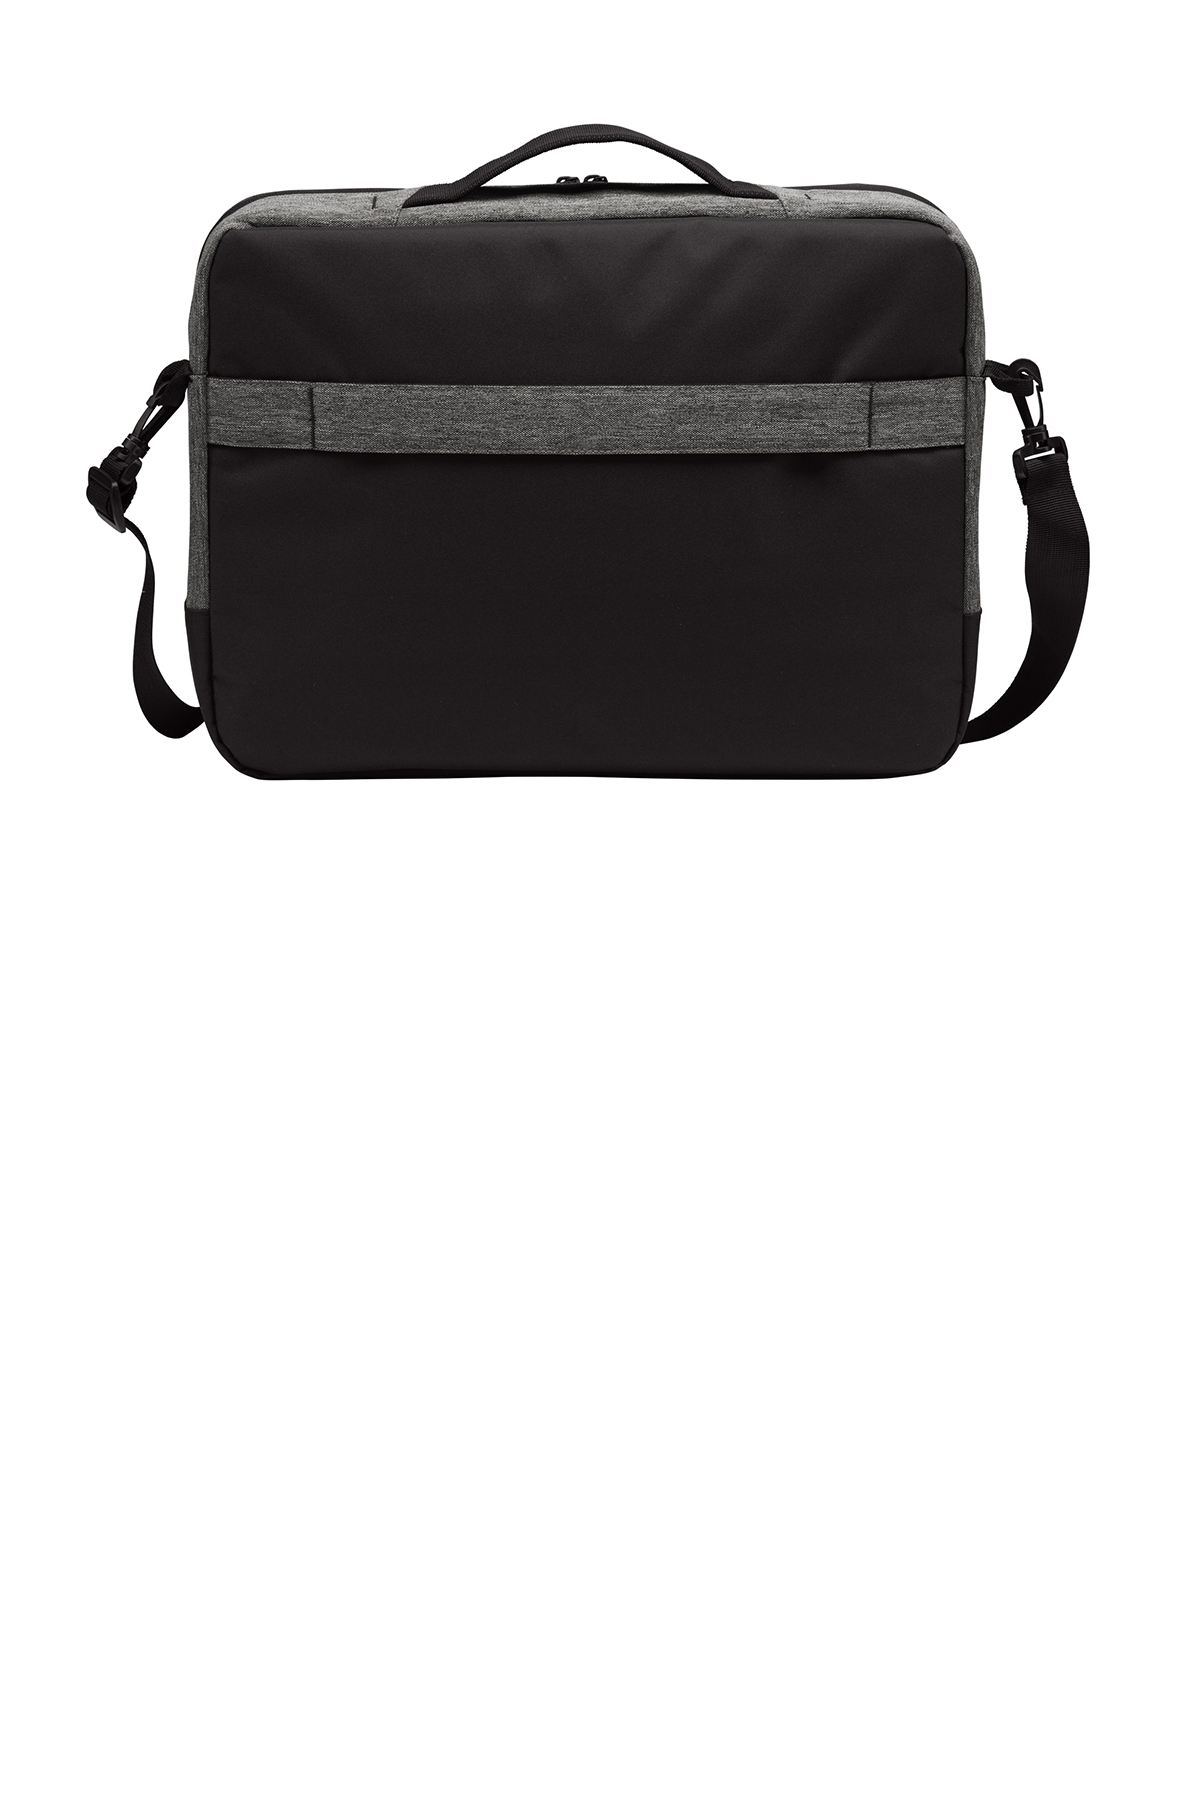 Oglio BROOKLYN Crossbody Bag black laptop 10 tall 11 long